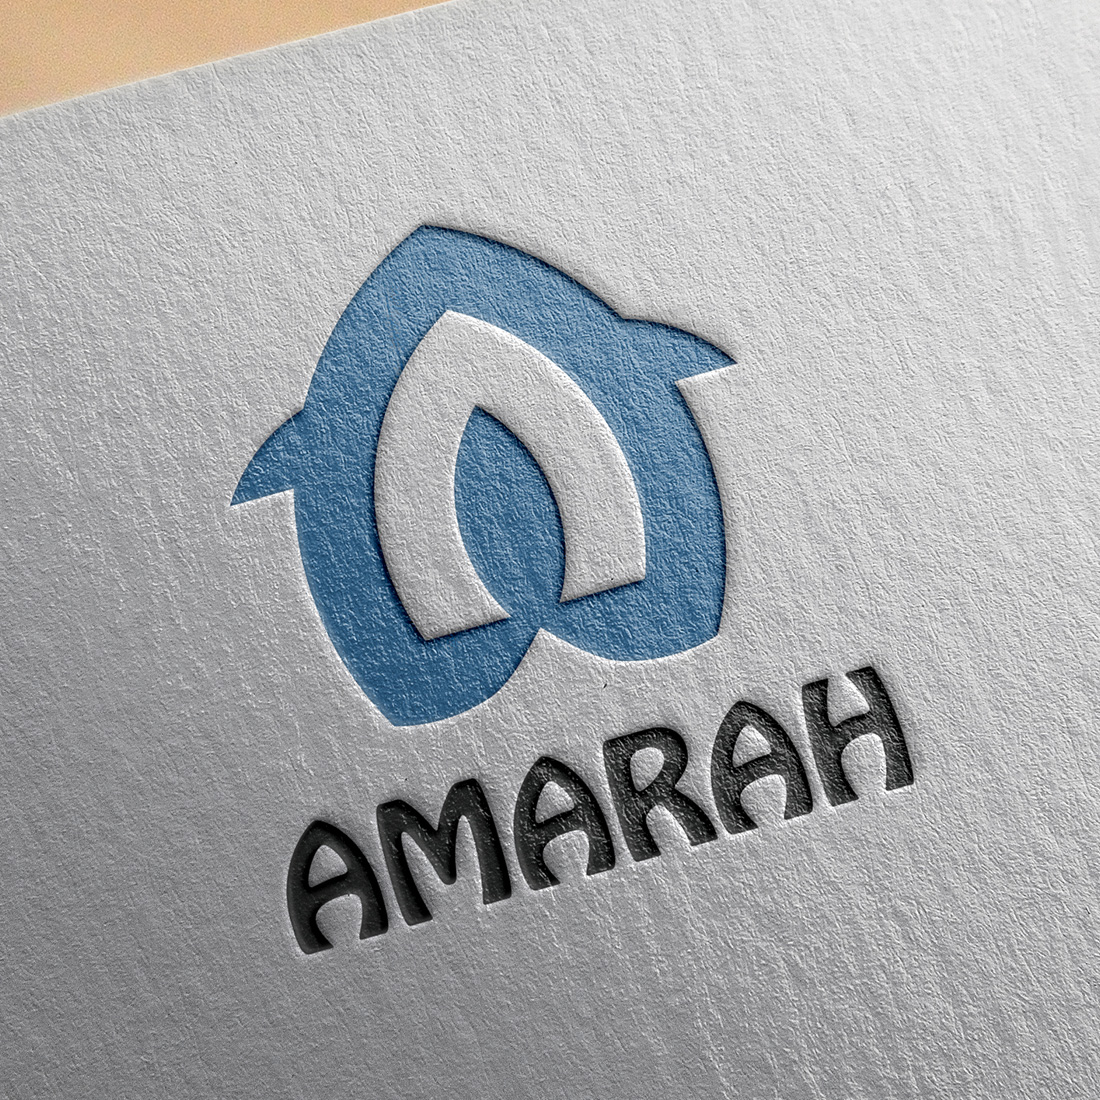 amarah preview add2